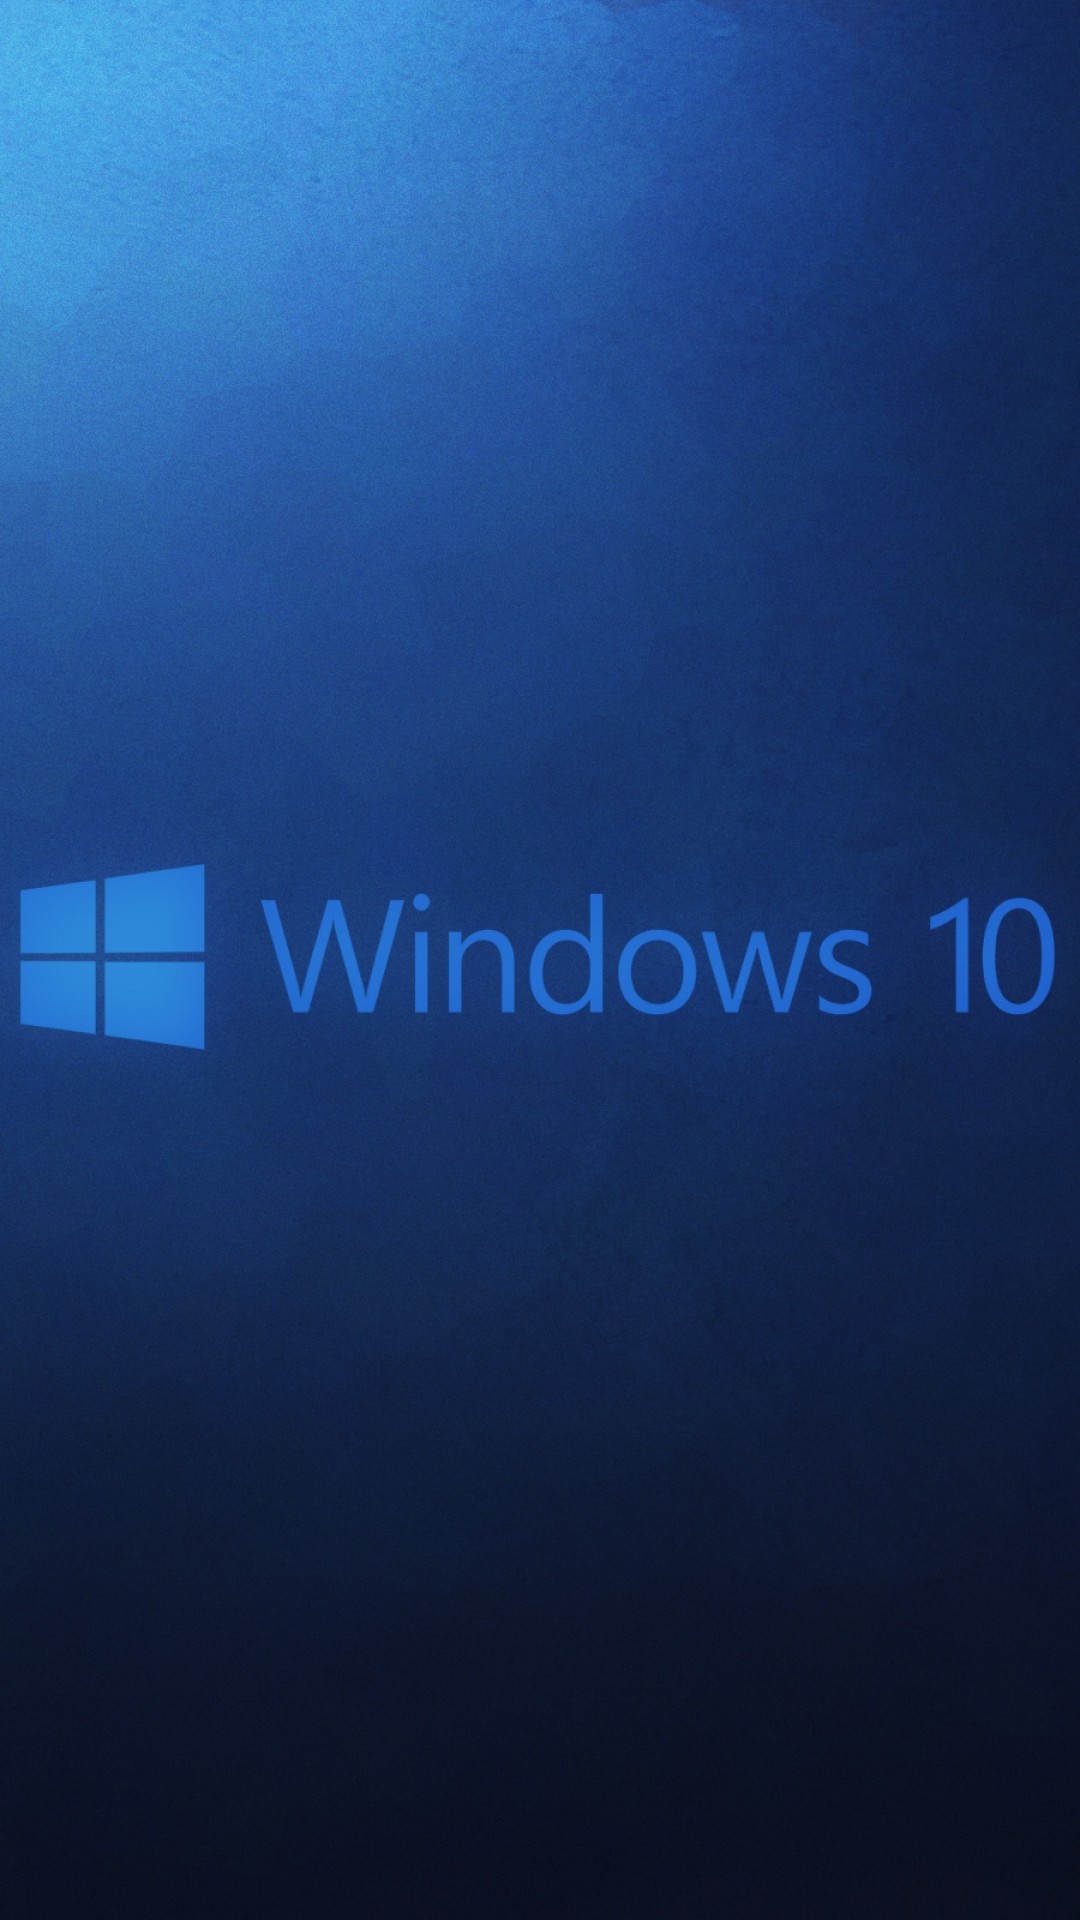 HD Background Windows 10 Wallpaper Microsoft Operating System Blue .